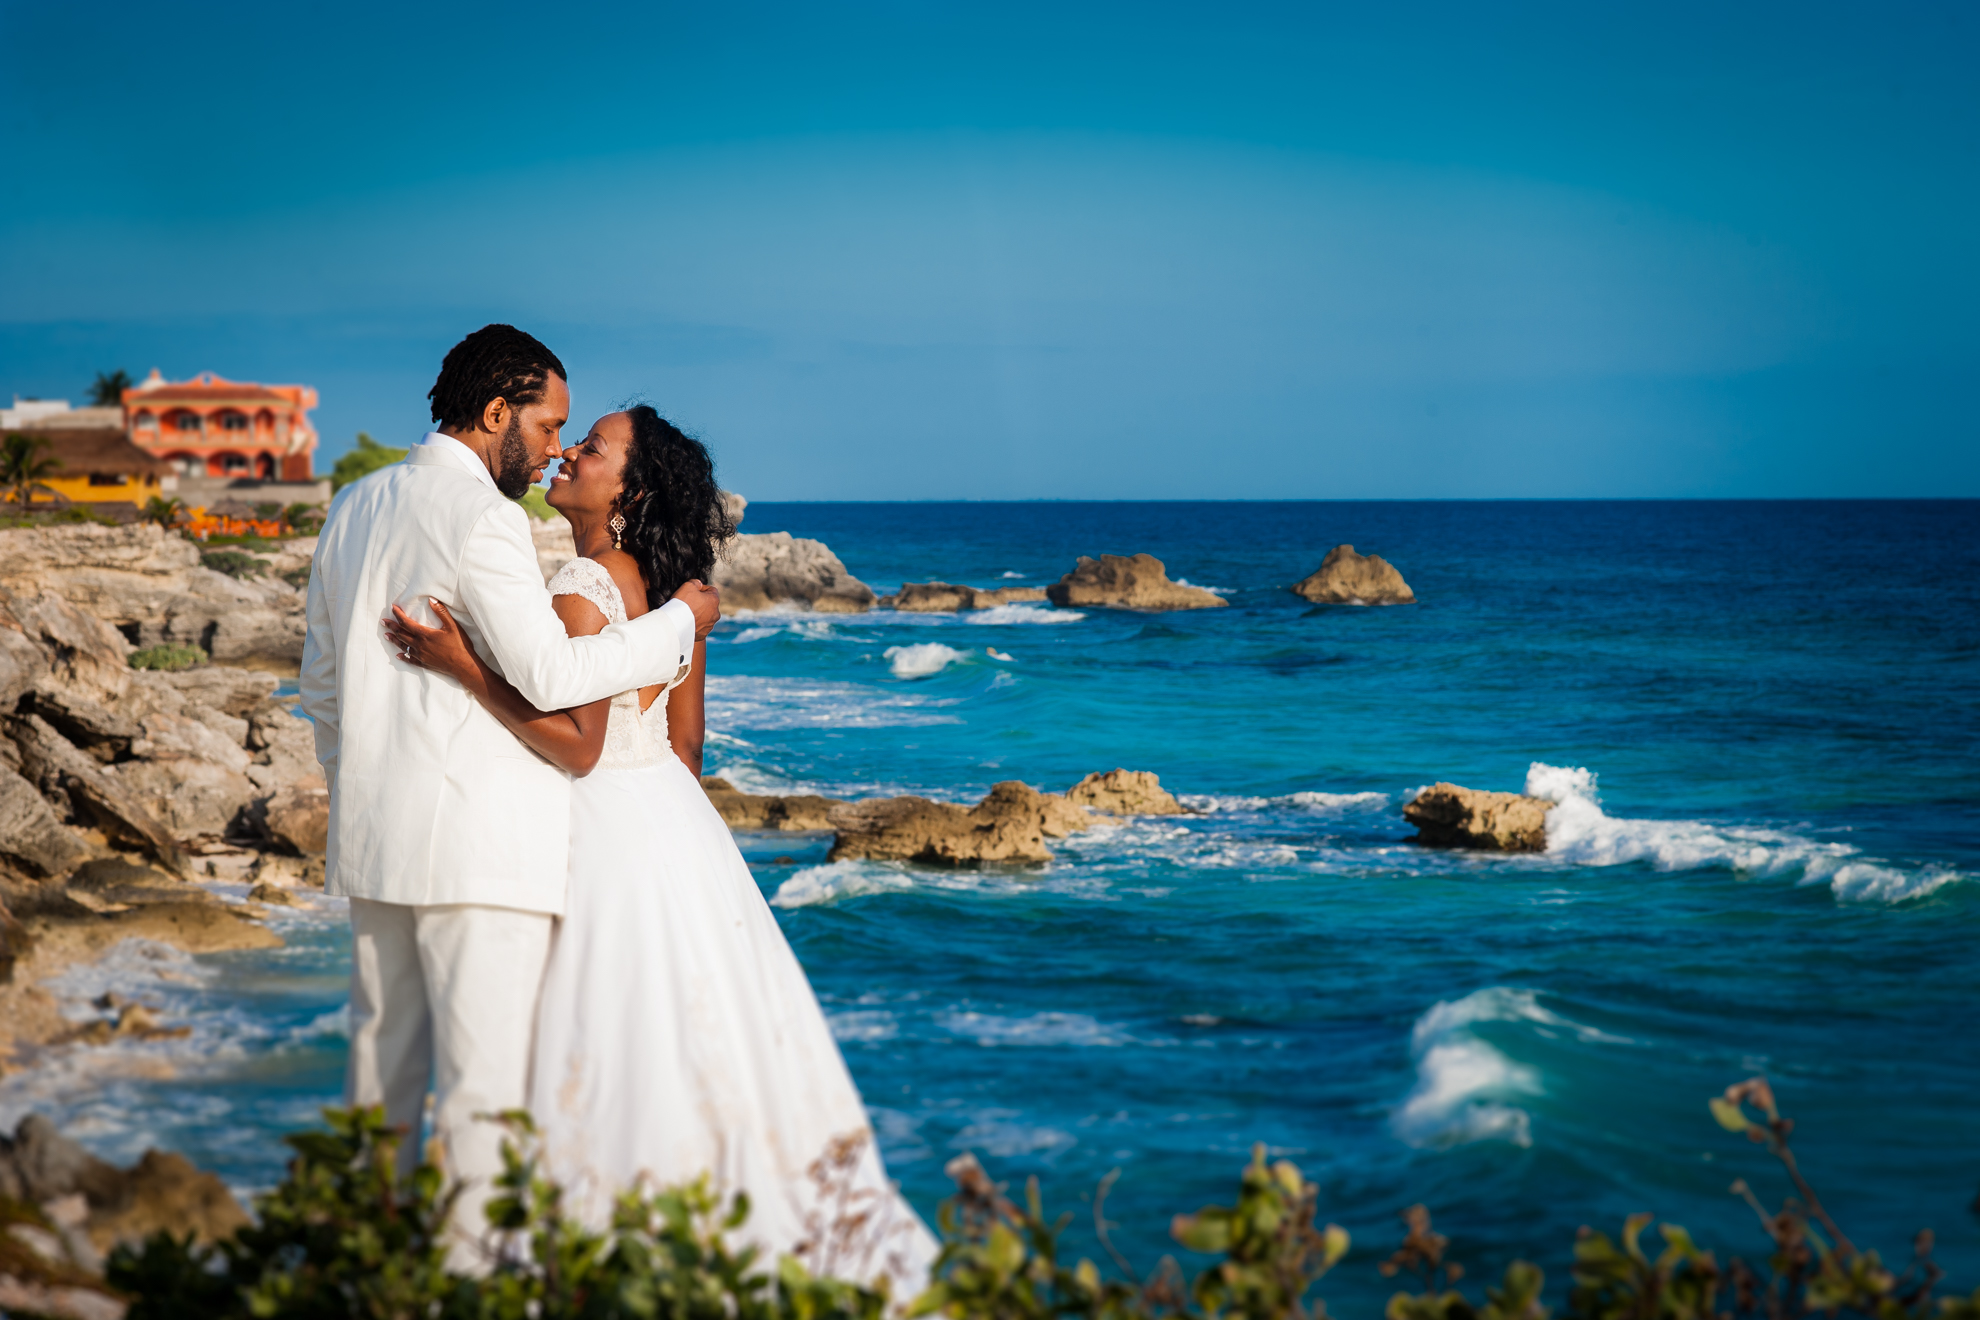 isla mujeres wedding bride and groom kiss on rocky coastline